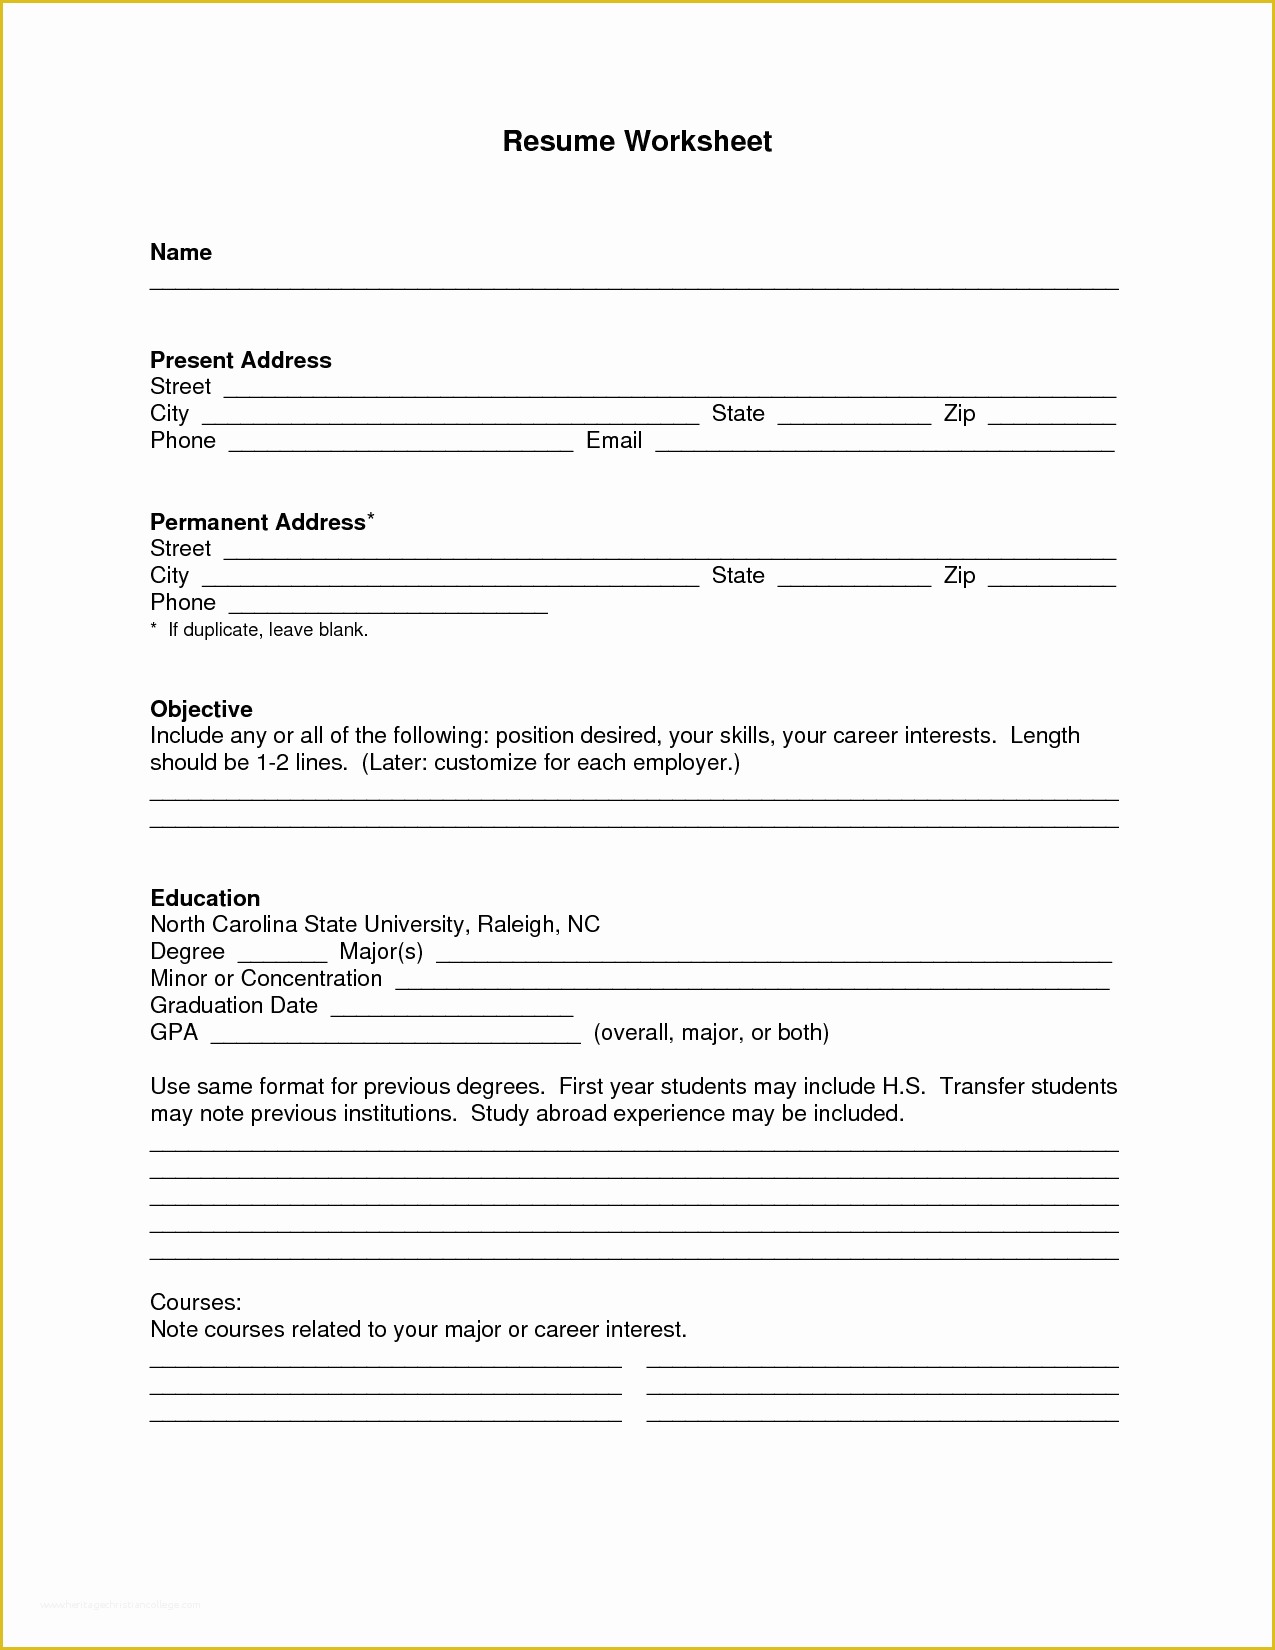 Free Printable Resume Templates Of Pin by Jobresume On Resume Career Termplate Free